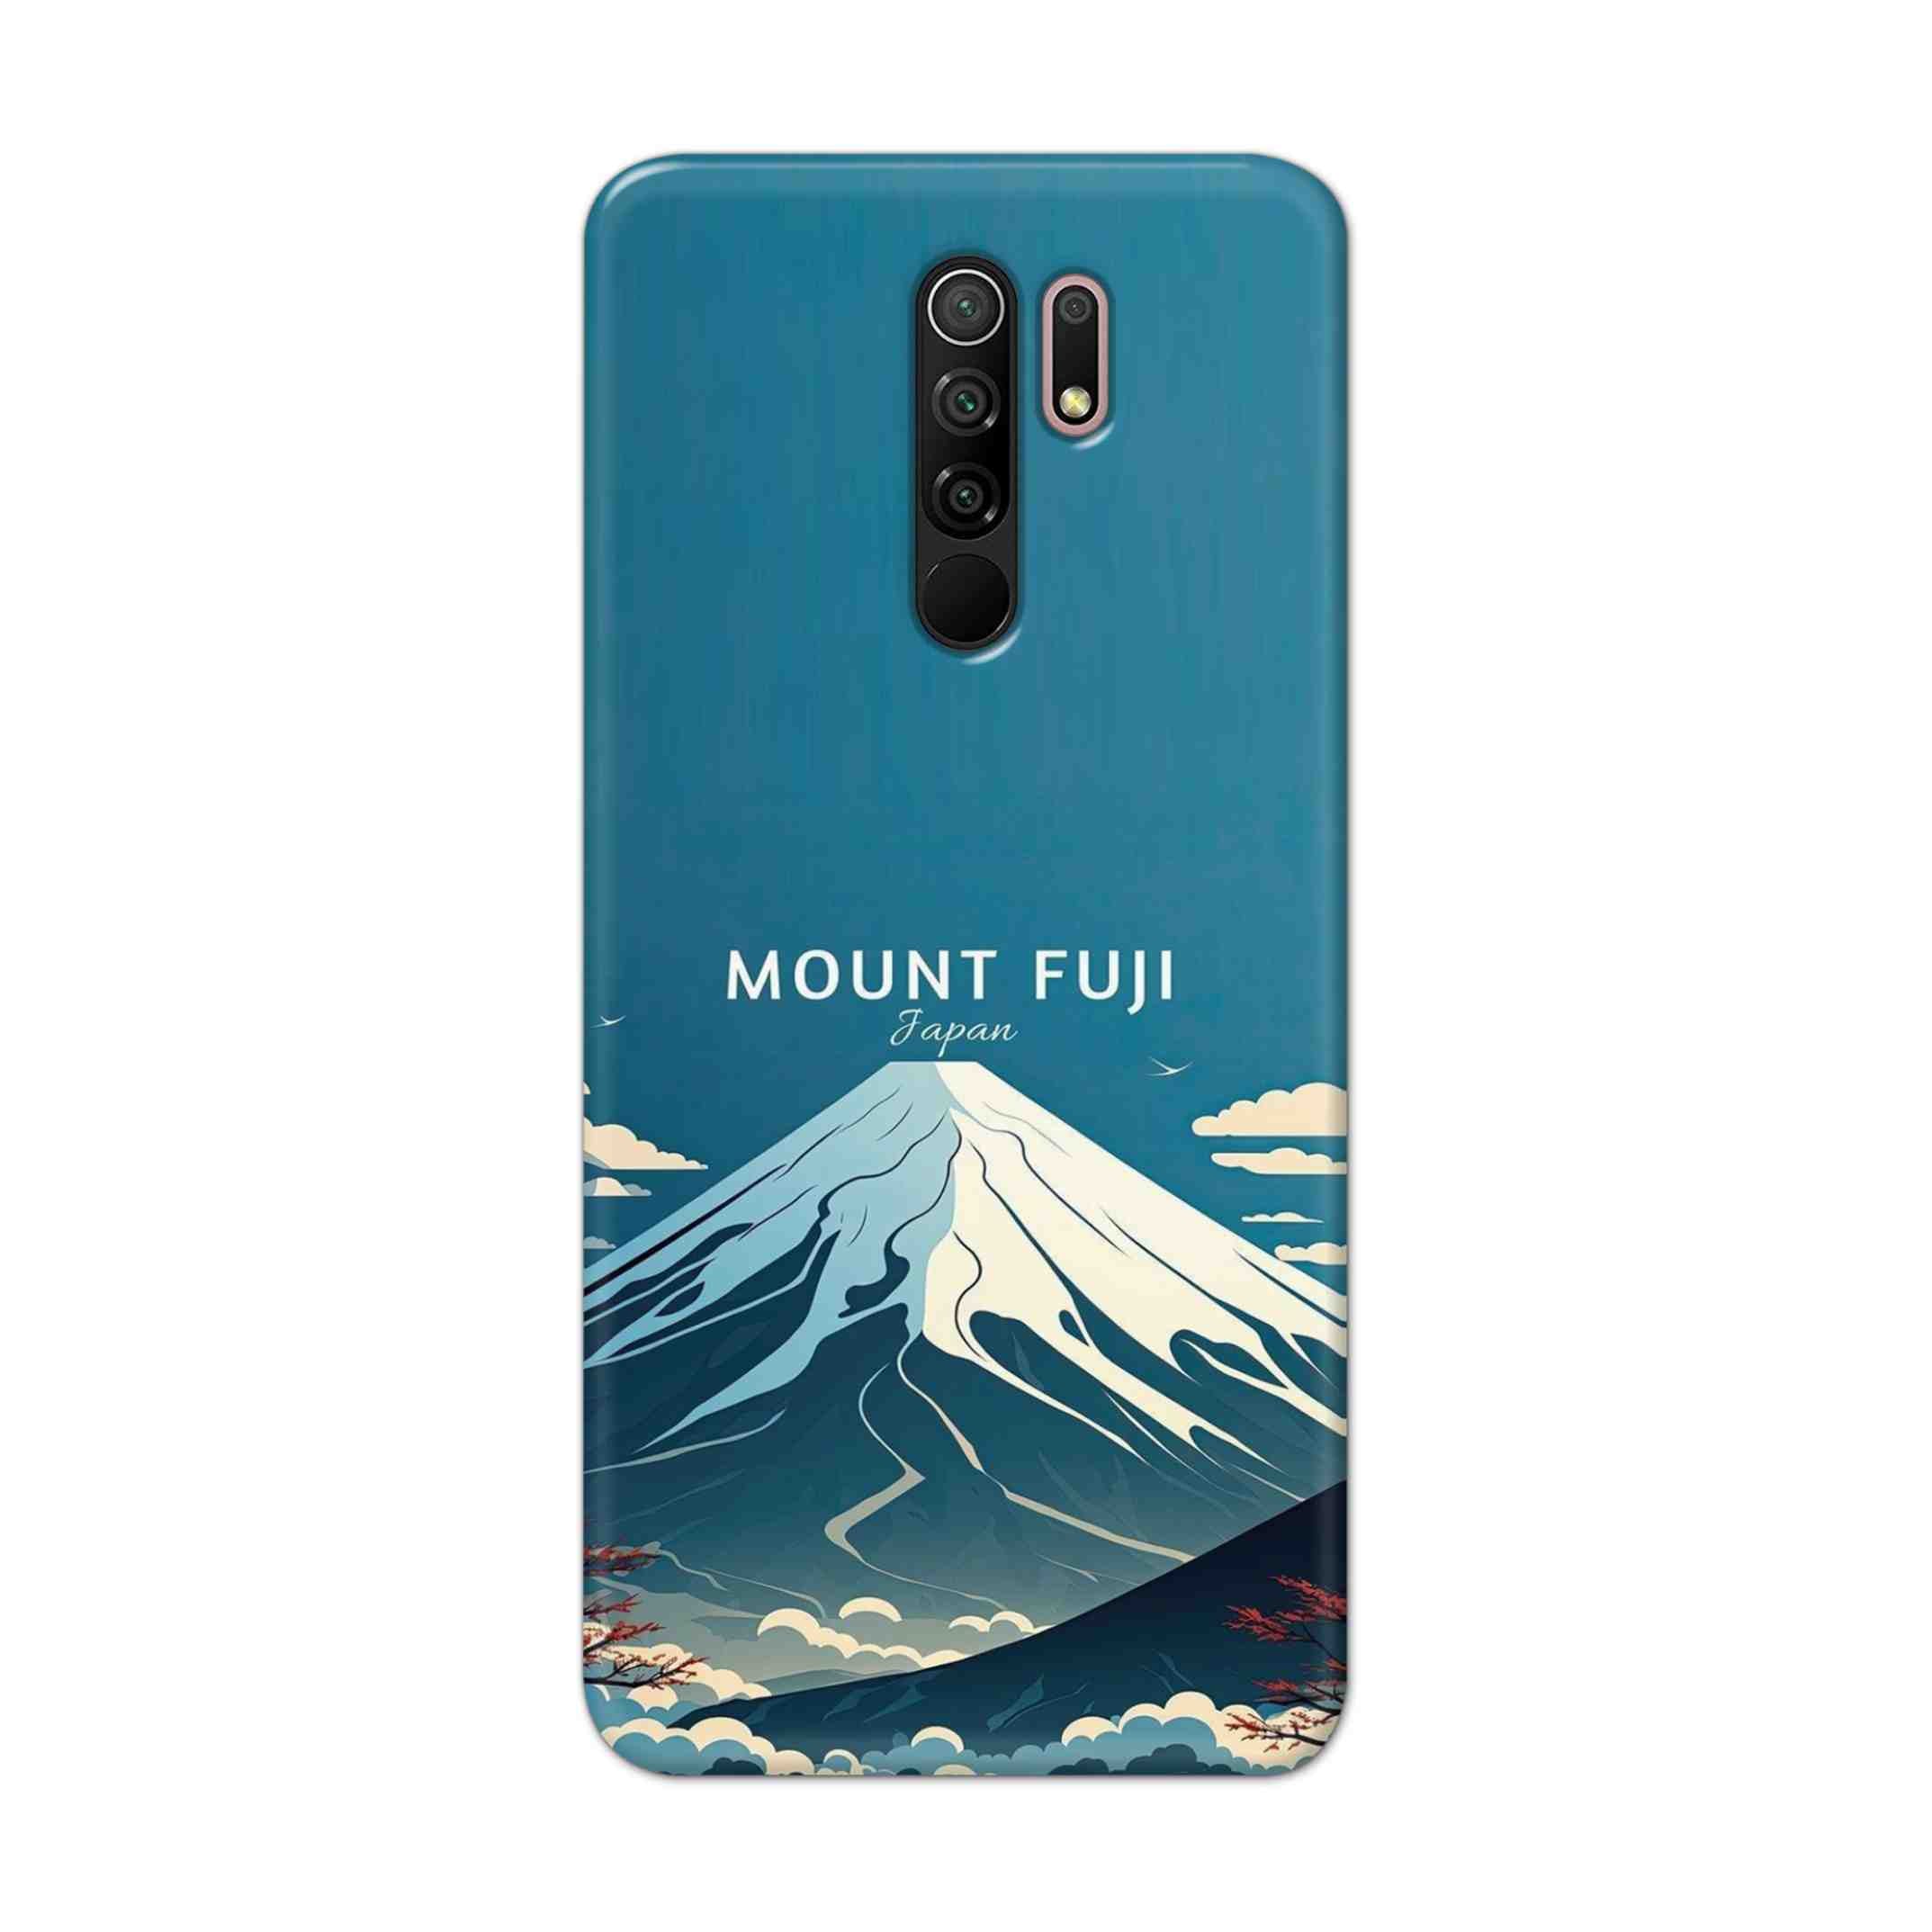 Buy Mount Fuji Hard Back Mobile Phone Case Cover For Xiaomi Redmi 9 Prime Online